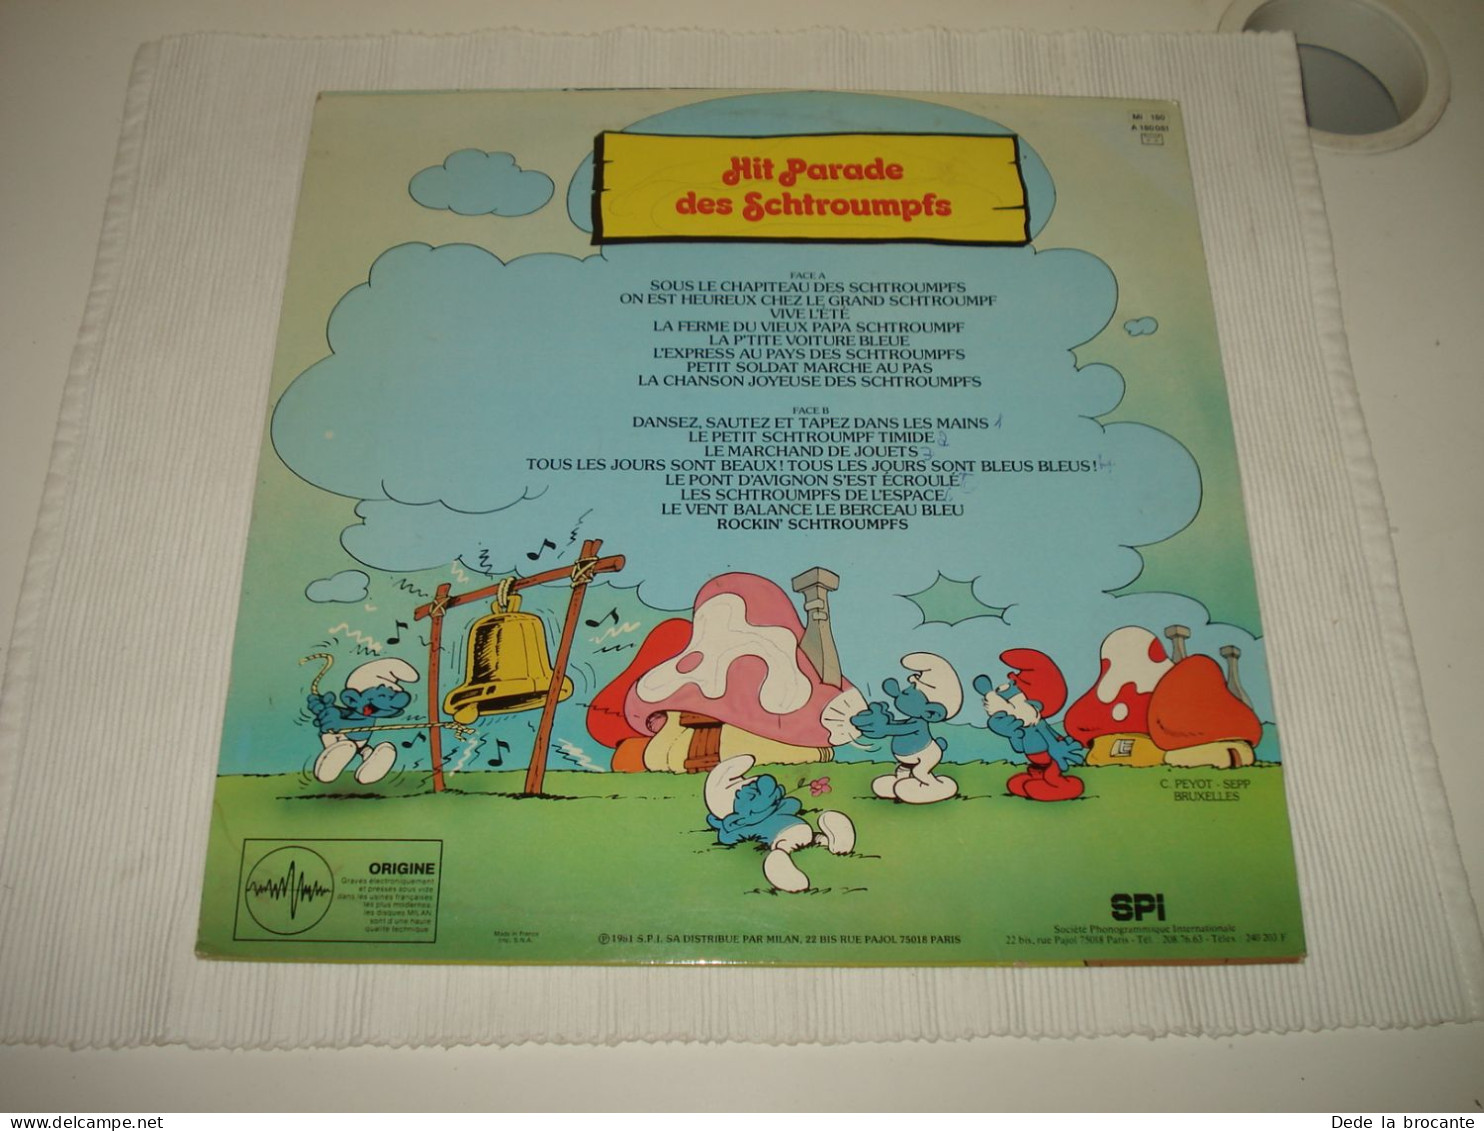 B14 / Hit Parade Des Schtroumpfs - Peyo - LP - A 150 051 - FR 1981  EX/EX - Children